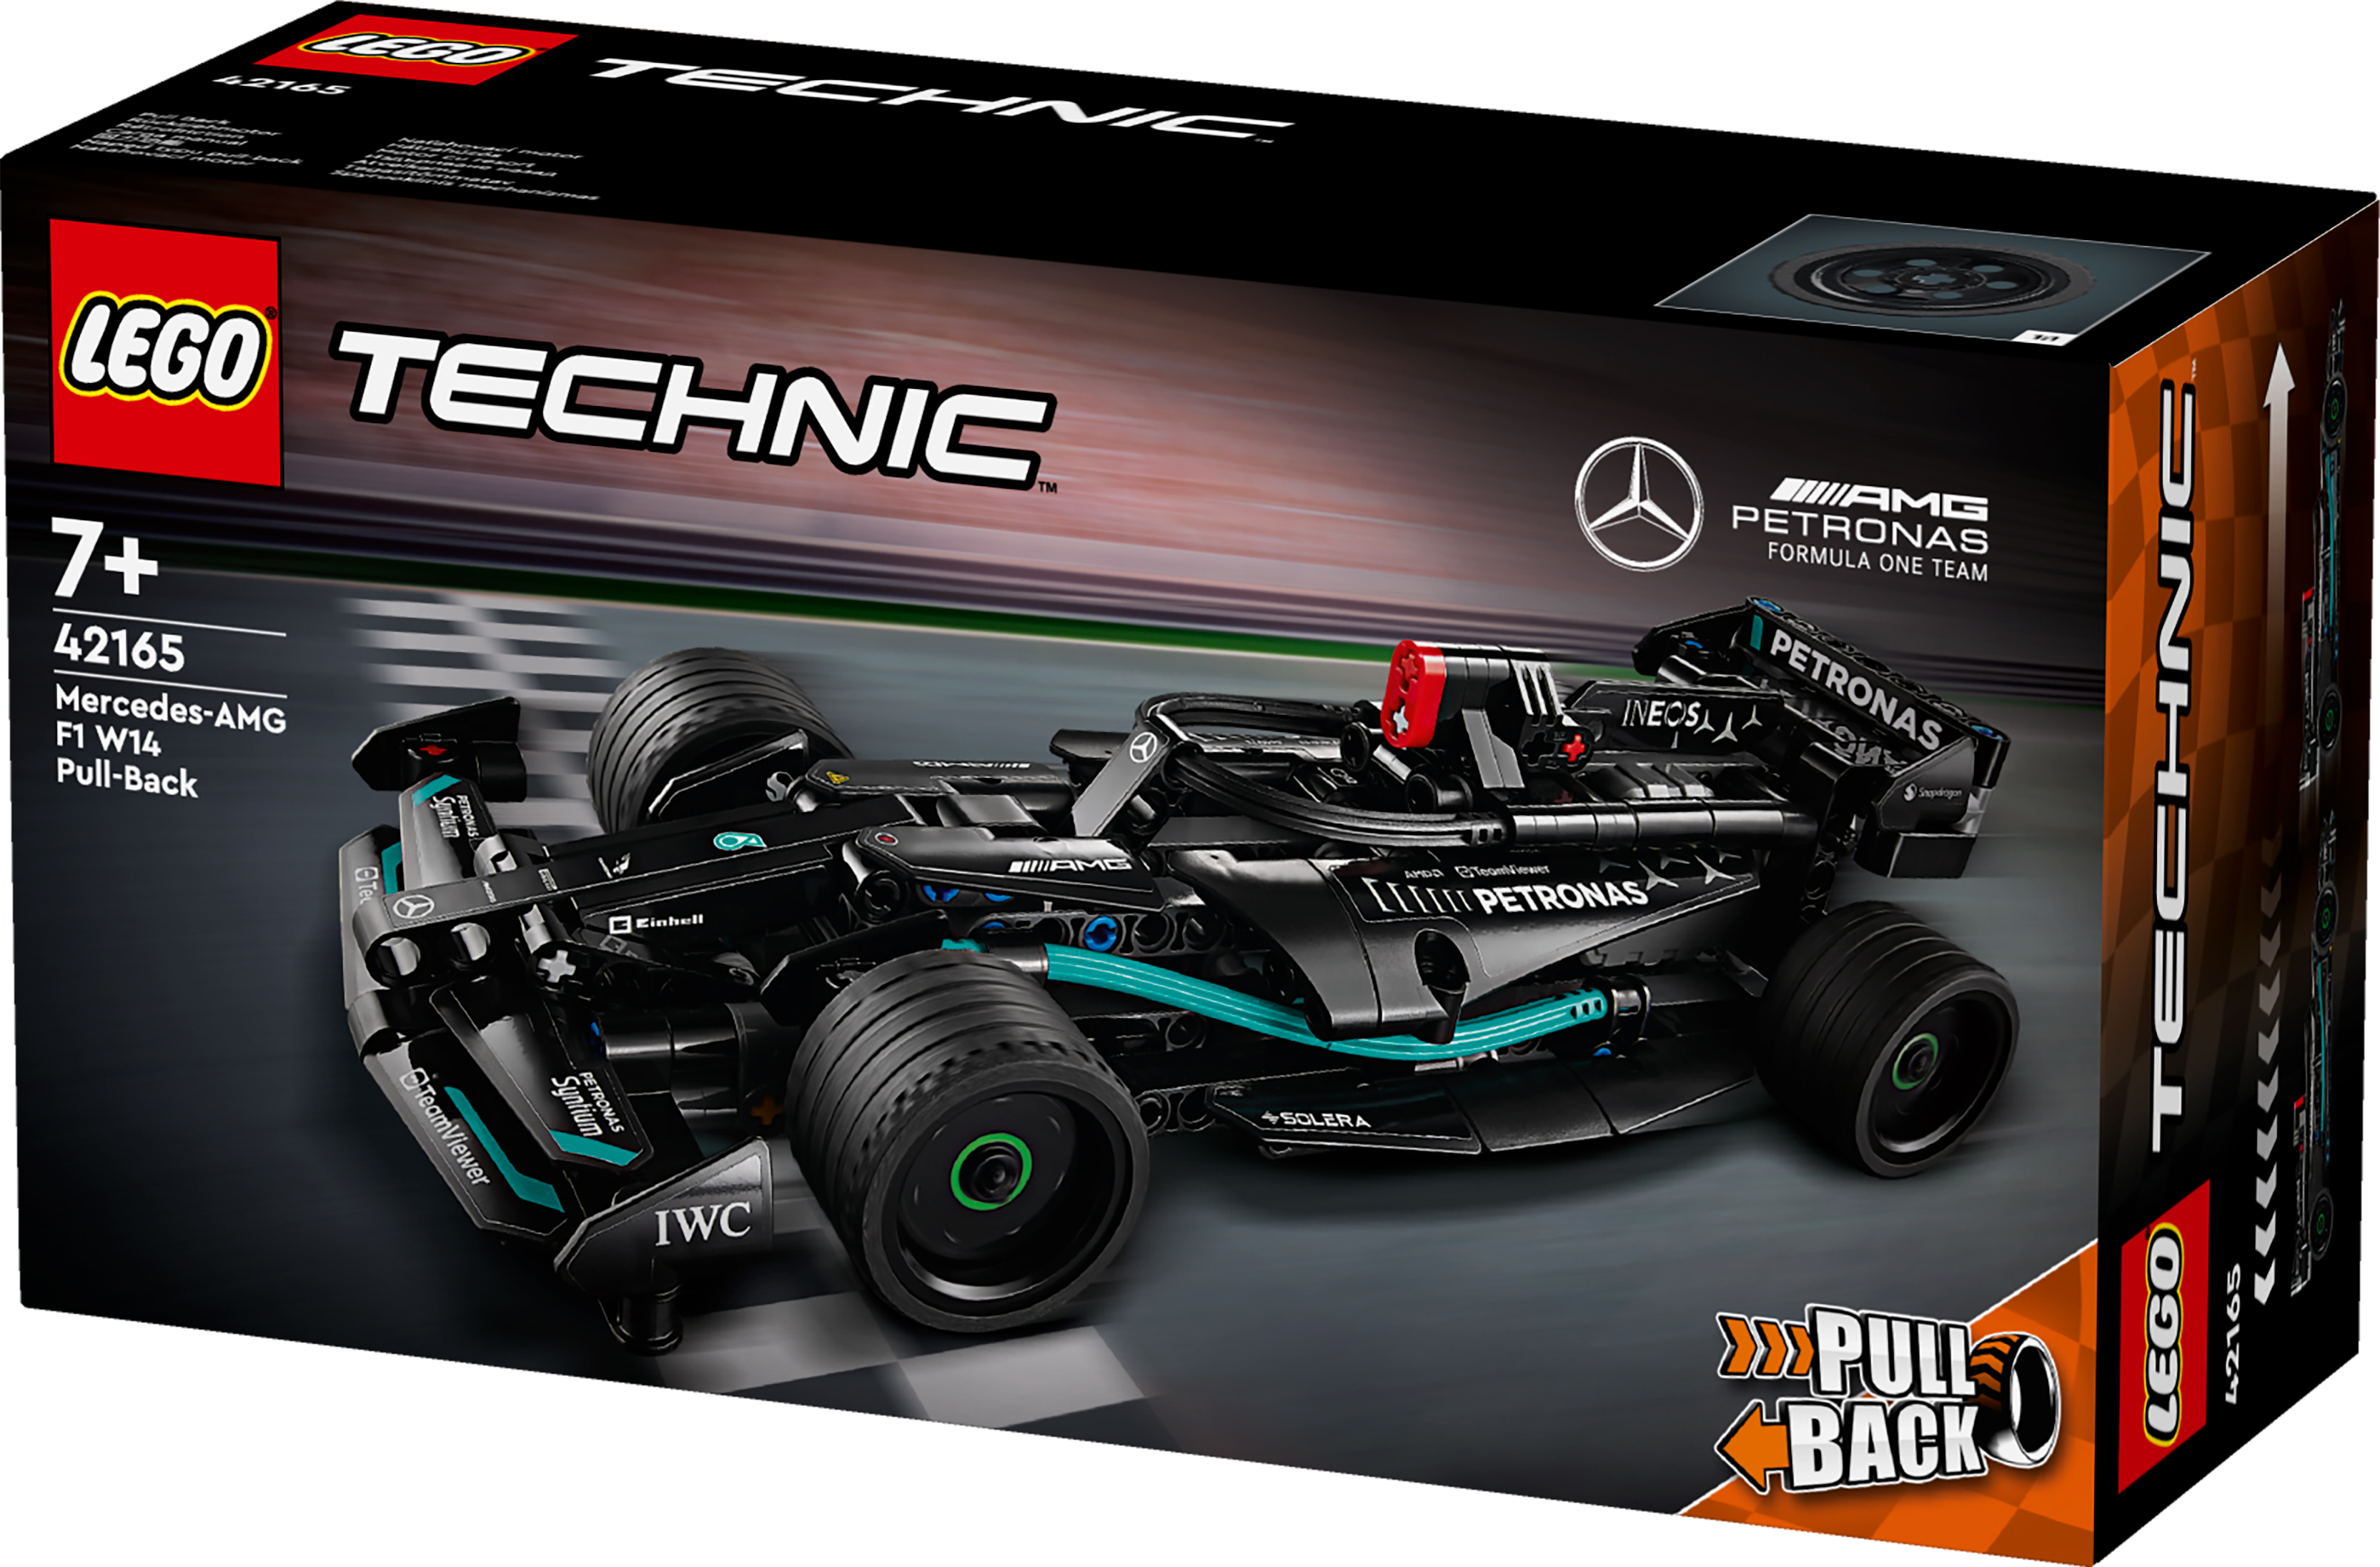 Lego 42165 Technic Mercedes-AMG F1 W14 E Performance Pull-Backфото3